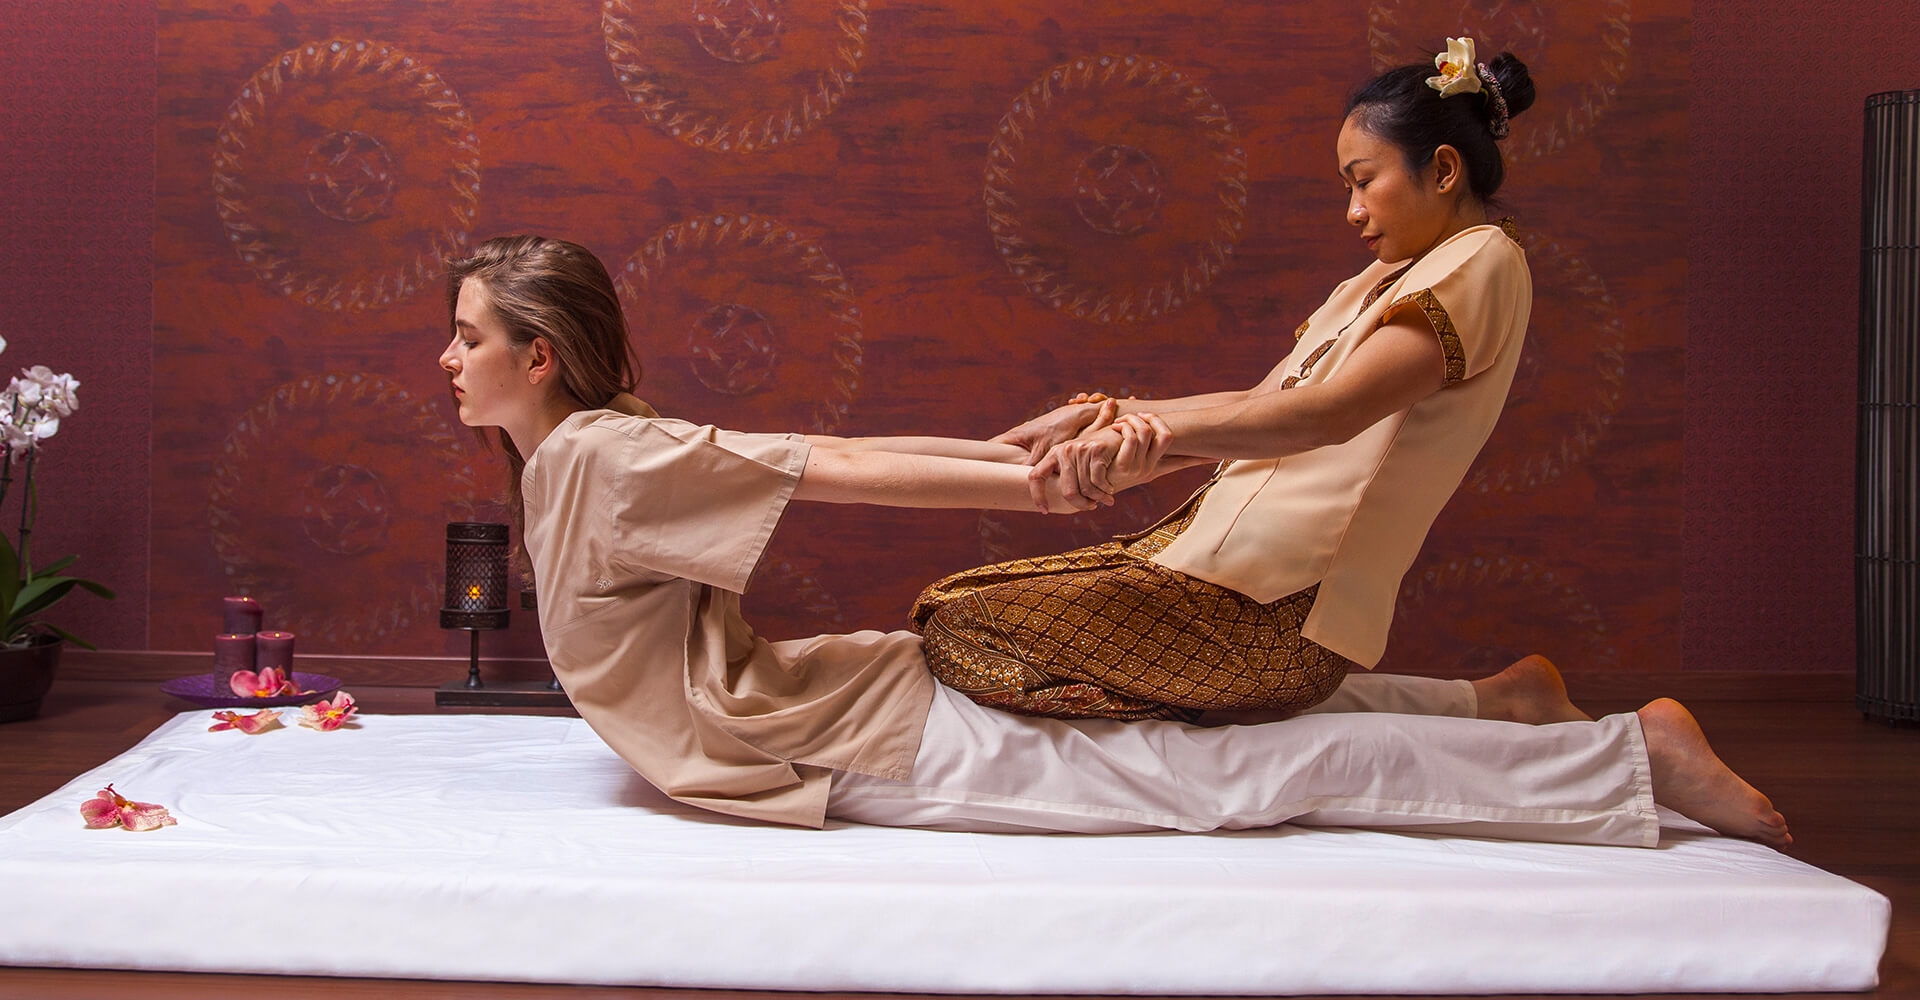 Traditional massage. Тайский массаж. Традиционный тайский массаж. Тайский массаж картинки. Классический тайский массаж.